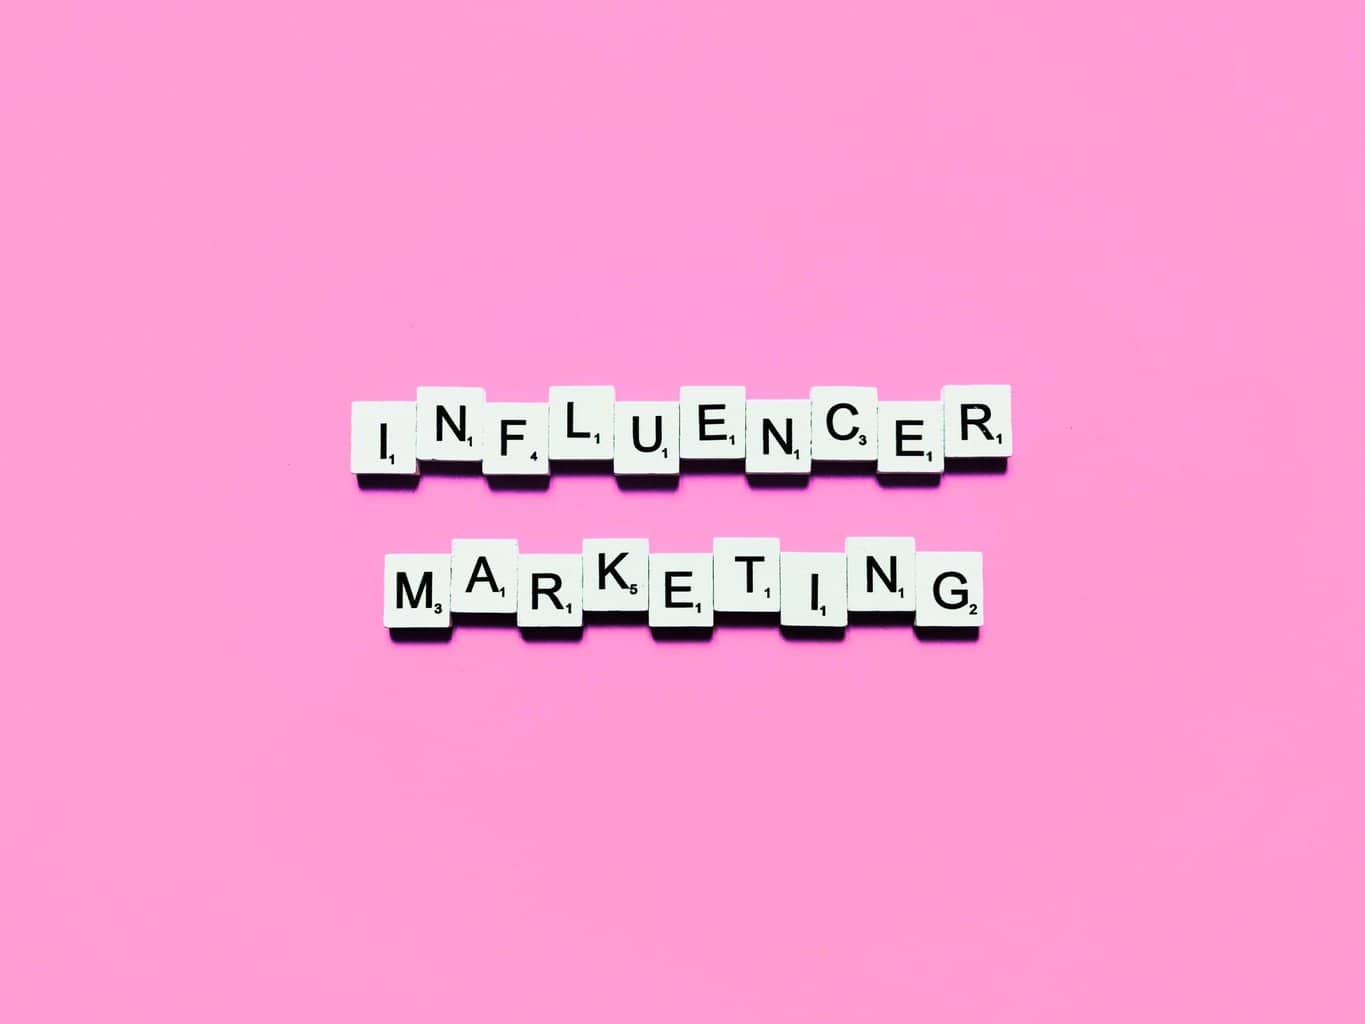 managing an influencer marketing campaign, influencer marketing